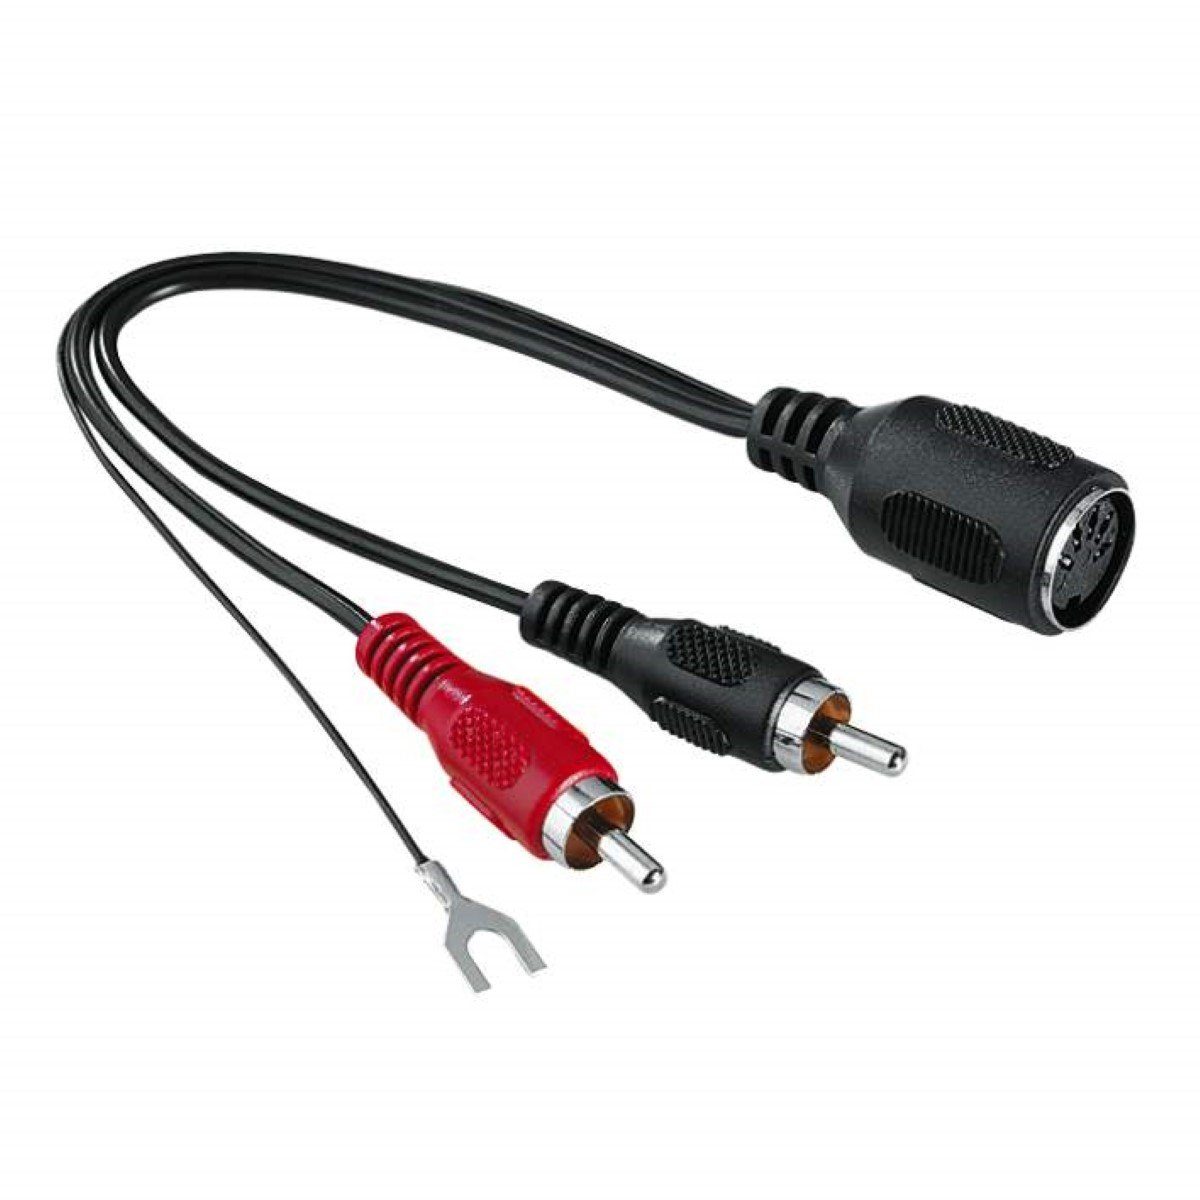 Hama Adapter DIN-Kupplung 5 polig + Masse zu Cinch Audio-Kabel,  RCA-Stecker, DIN 5-Pol. + Masse (10 cm), DIN-Buchse 5-Polig auf 2x Cinch-Stecker  RCA Cinch-Kabel, Audio-Adapter, Stereo passend für Verstärker Tonband  Tape-Deck HiFi